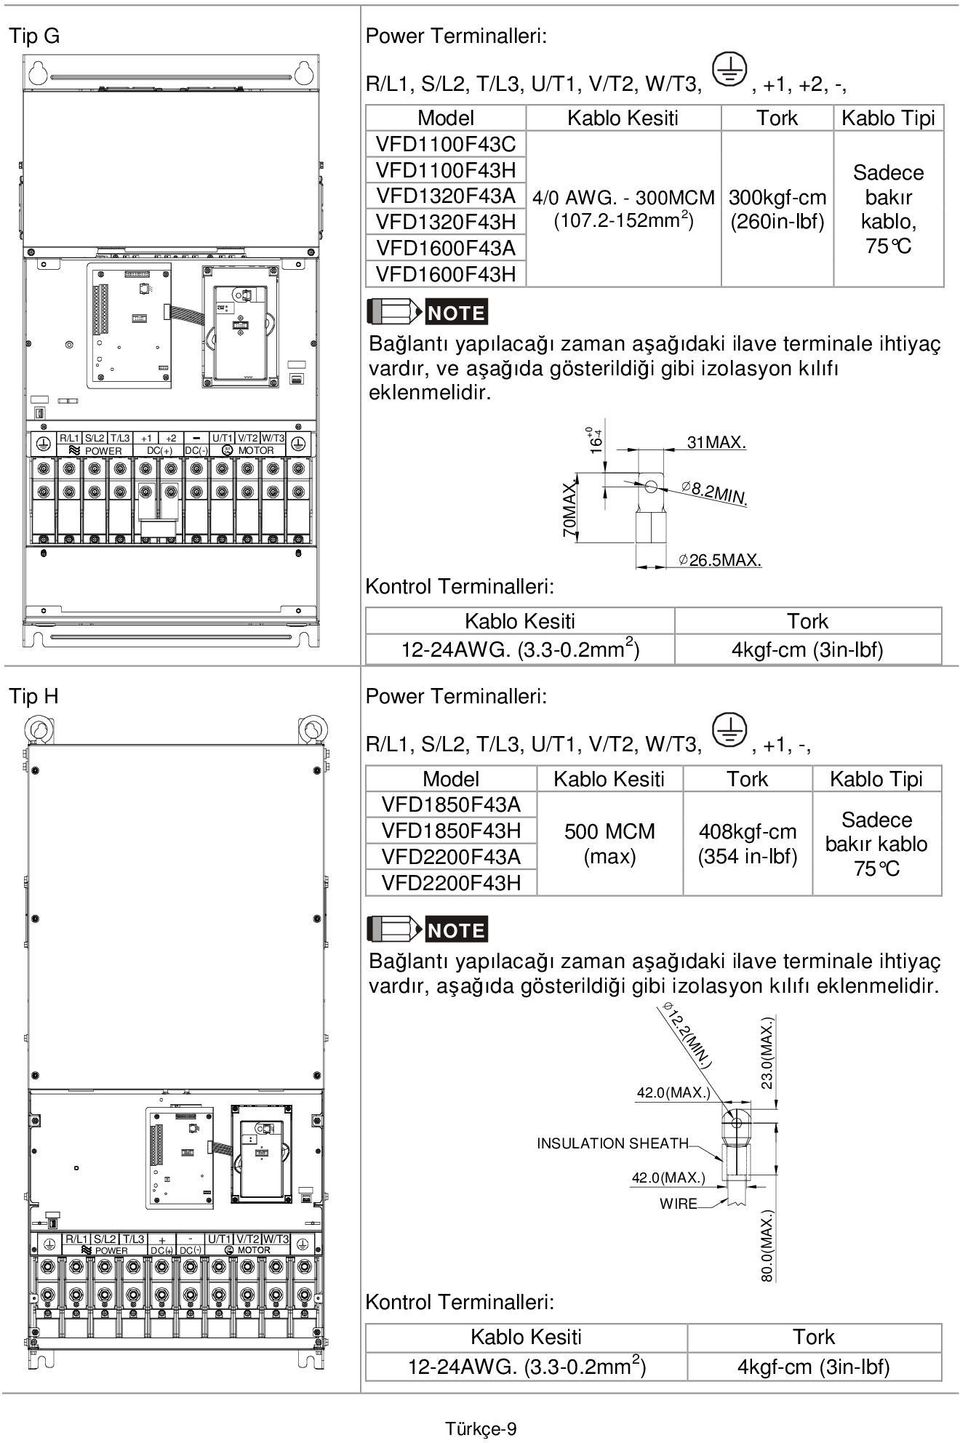 S/L2 R/L1 +2 V/T2 T/L3 +1 /T1 W/T3 POWER DC(+) MOTOR 3 IM DC(-) 16 +0-4 31MAX. 70MAX. 8.2MIN. Kontrol Terminalleri: Kablo Kesiti 12-24AWG. (3.3-0.2mm 2 ) 26.5MAX.